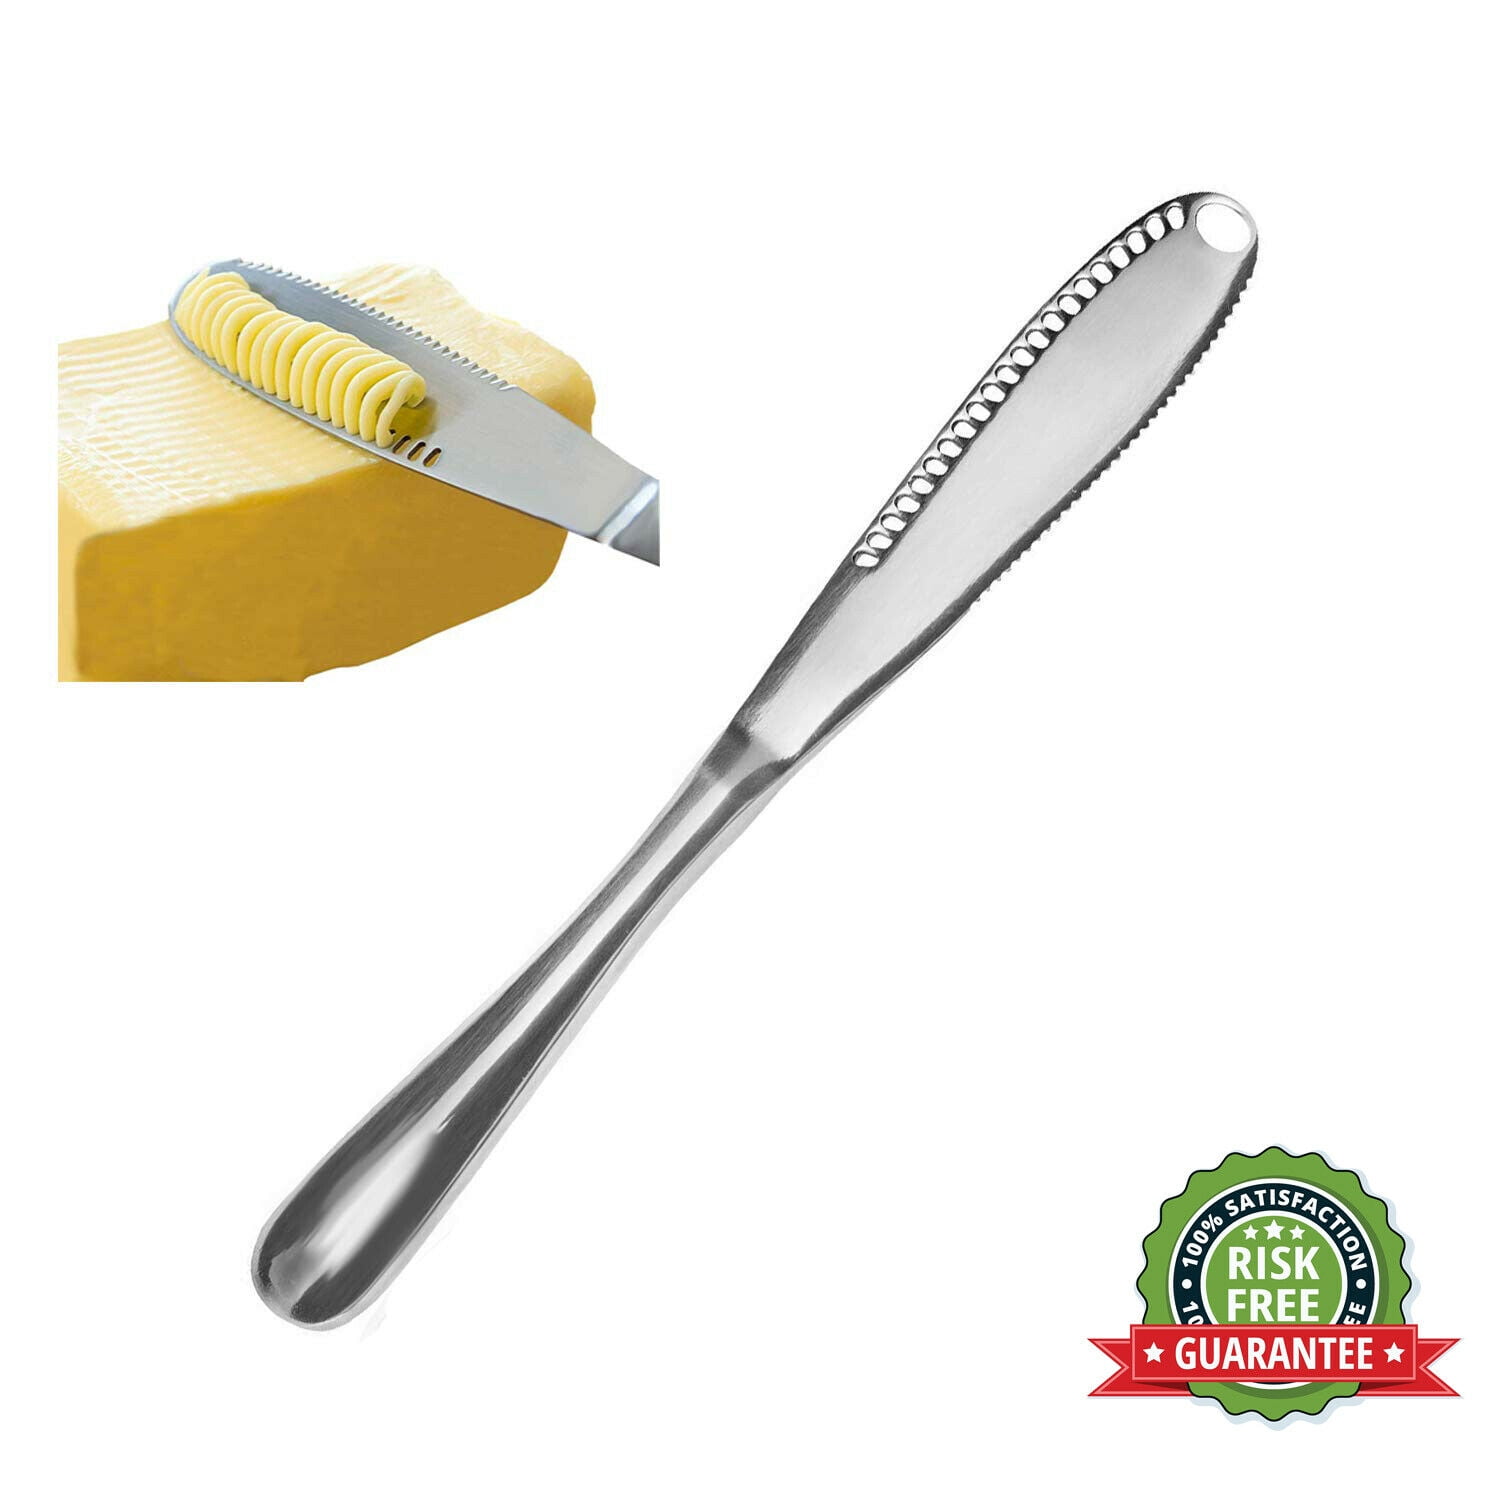 smylls Stainless Steel Butter Spreader Knife, 3 in 1 Kitchen Gadgets,  Curler, Butter Grater, Multi-Function Butter Spreader and Grater with  Serrated